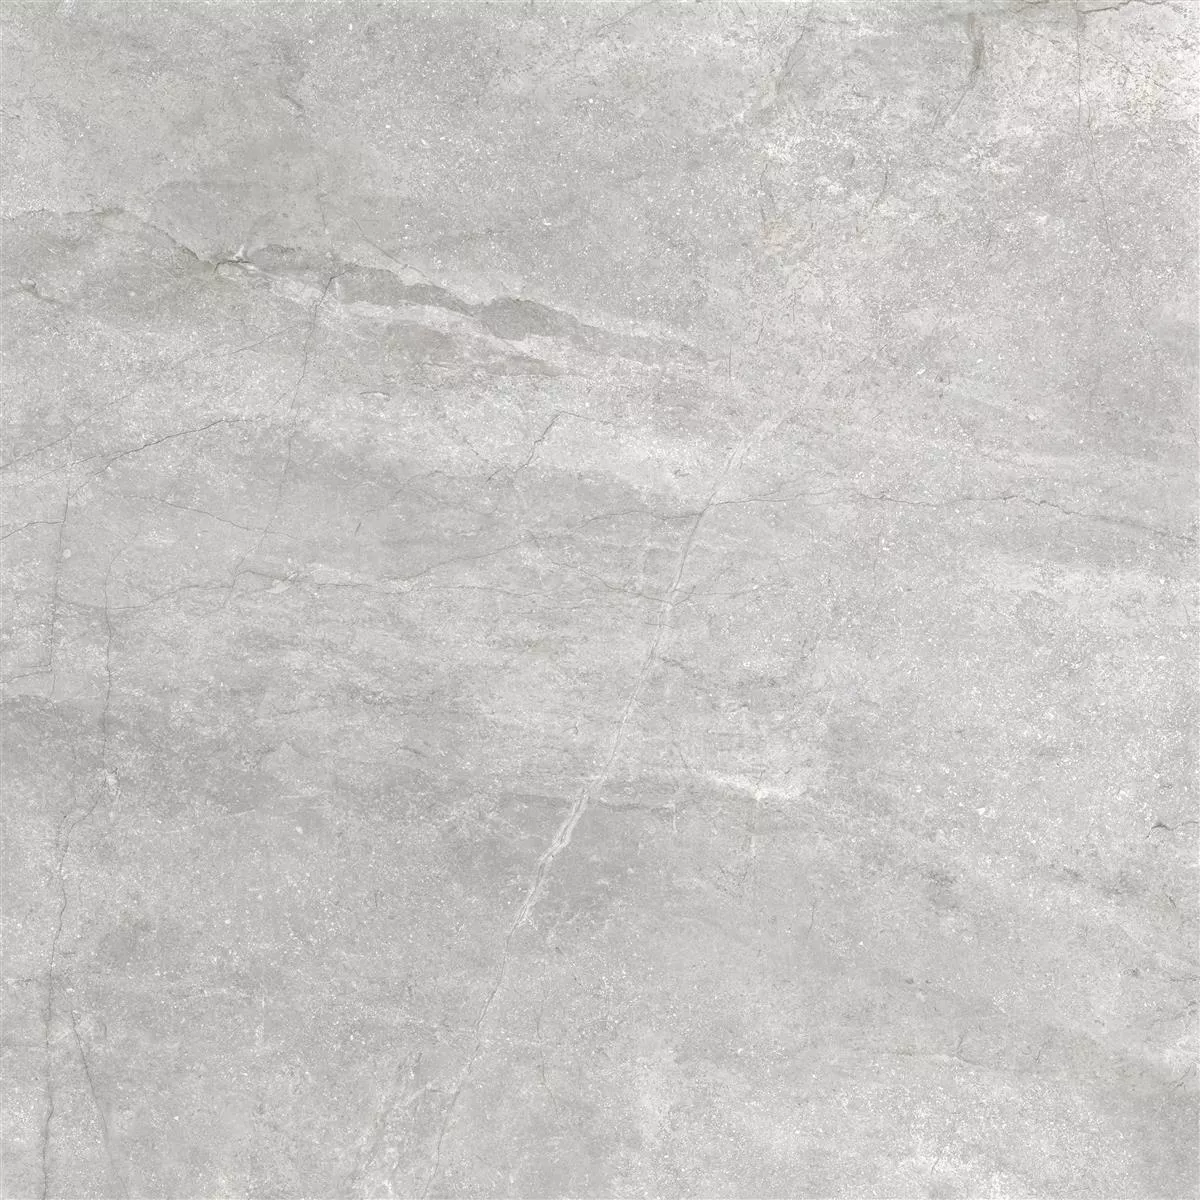 Vzorek Podlahové Dlaždice Pangea Mramorový Vzhled Matný Stříbrná 120x120cm